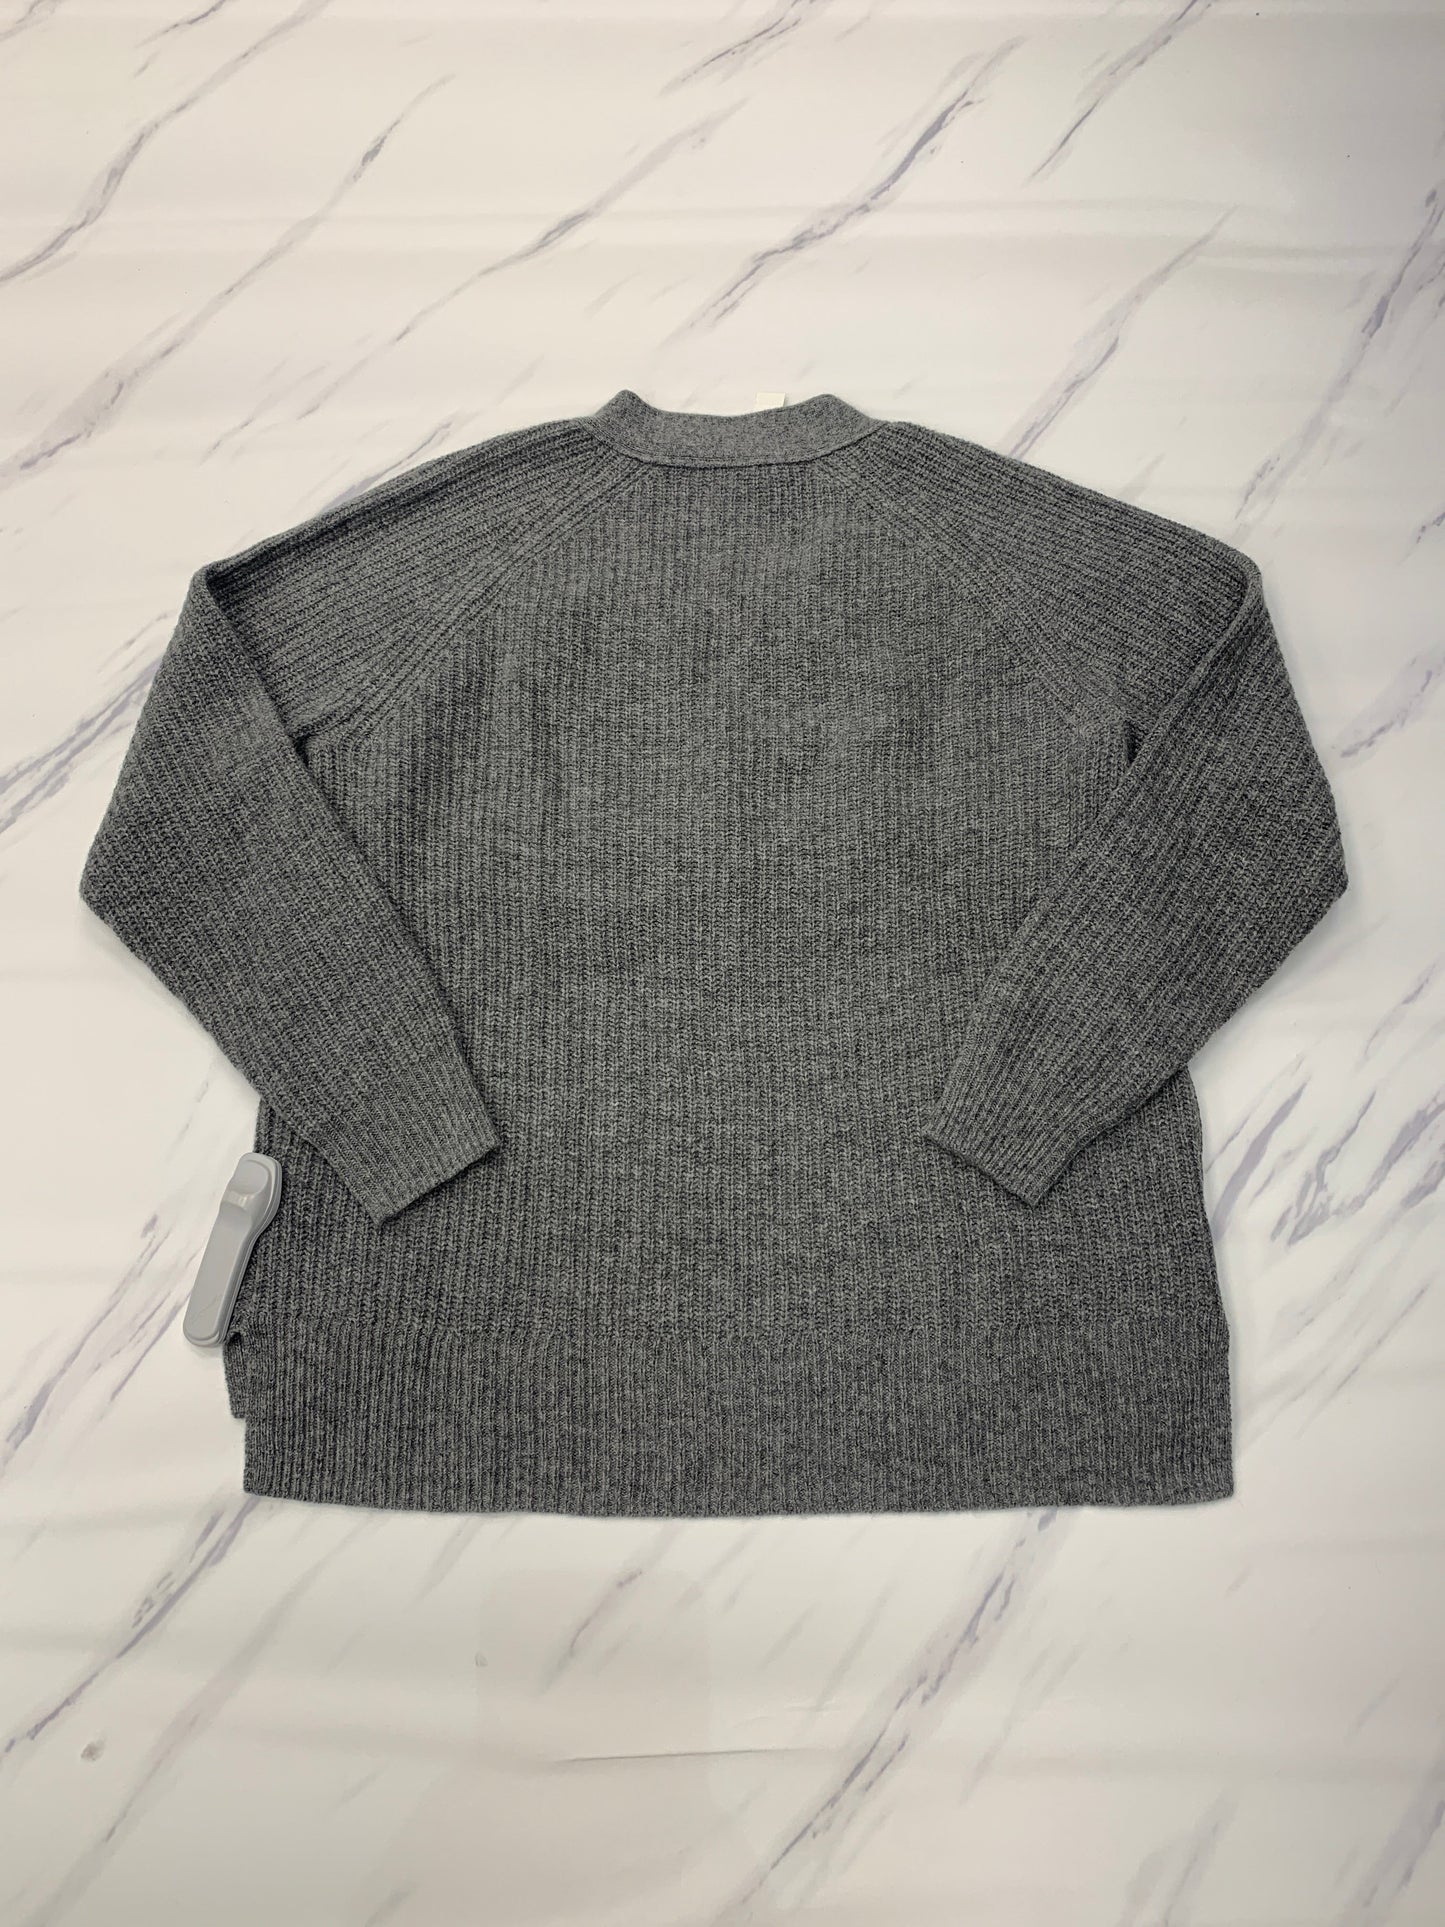 Sweater By Madewell  Size: Xxs